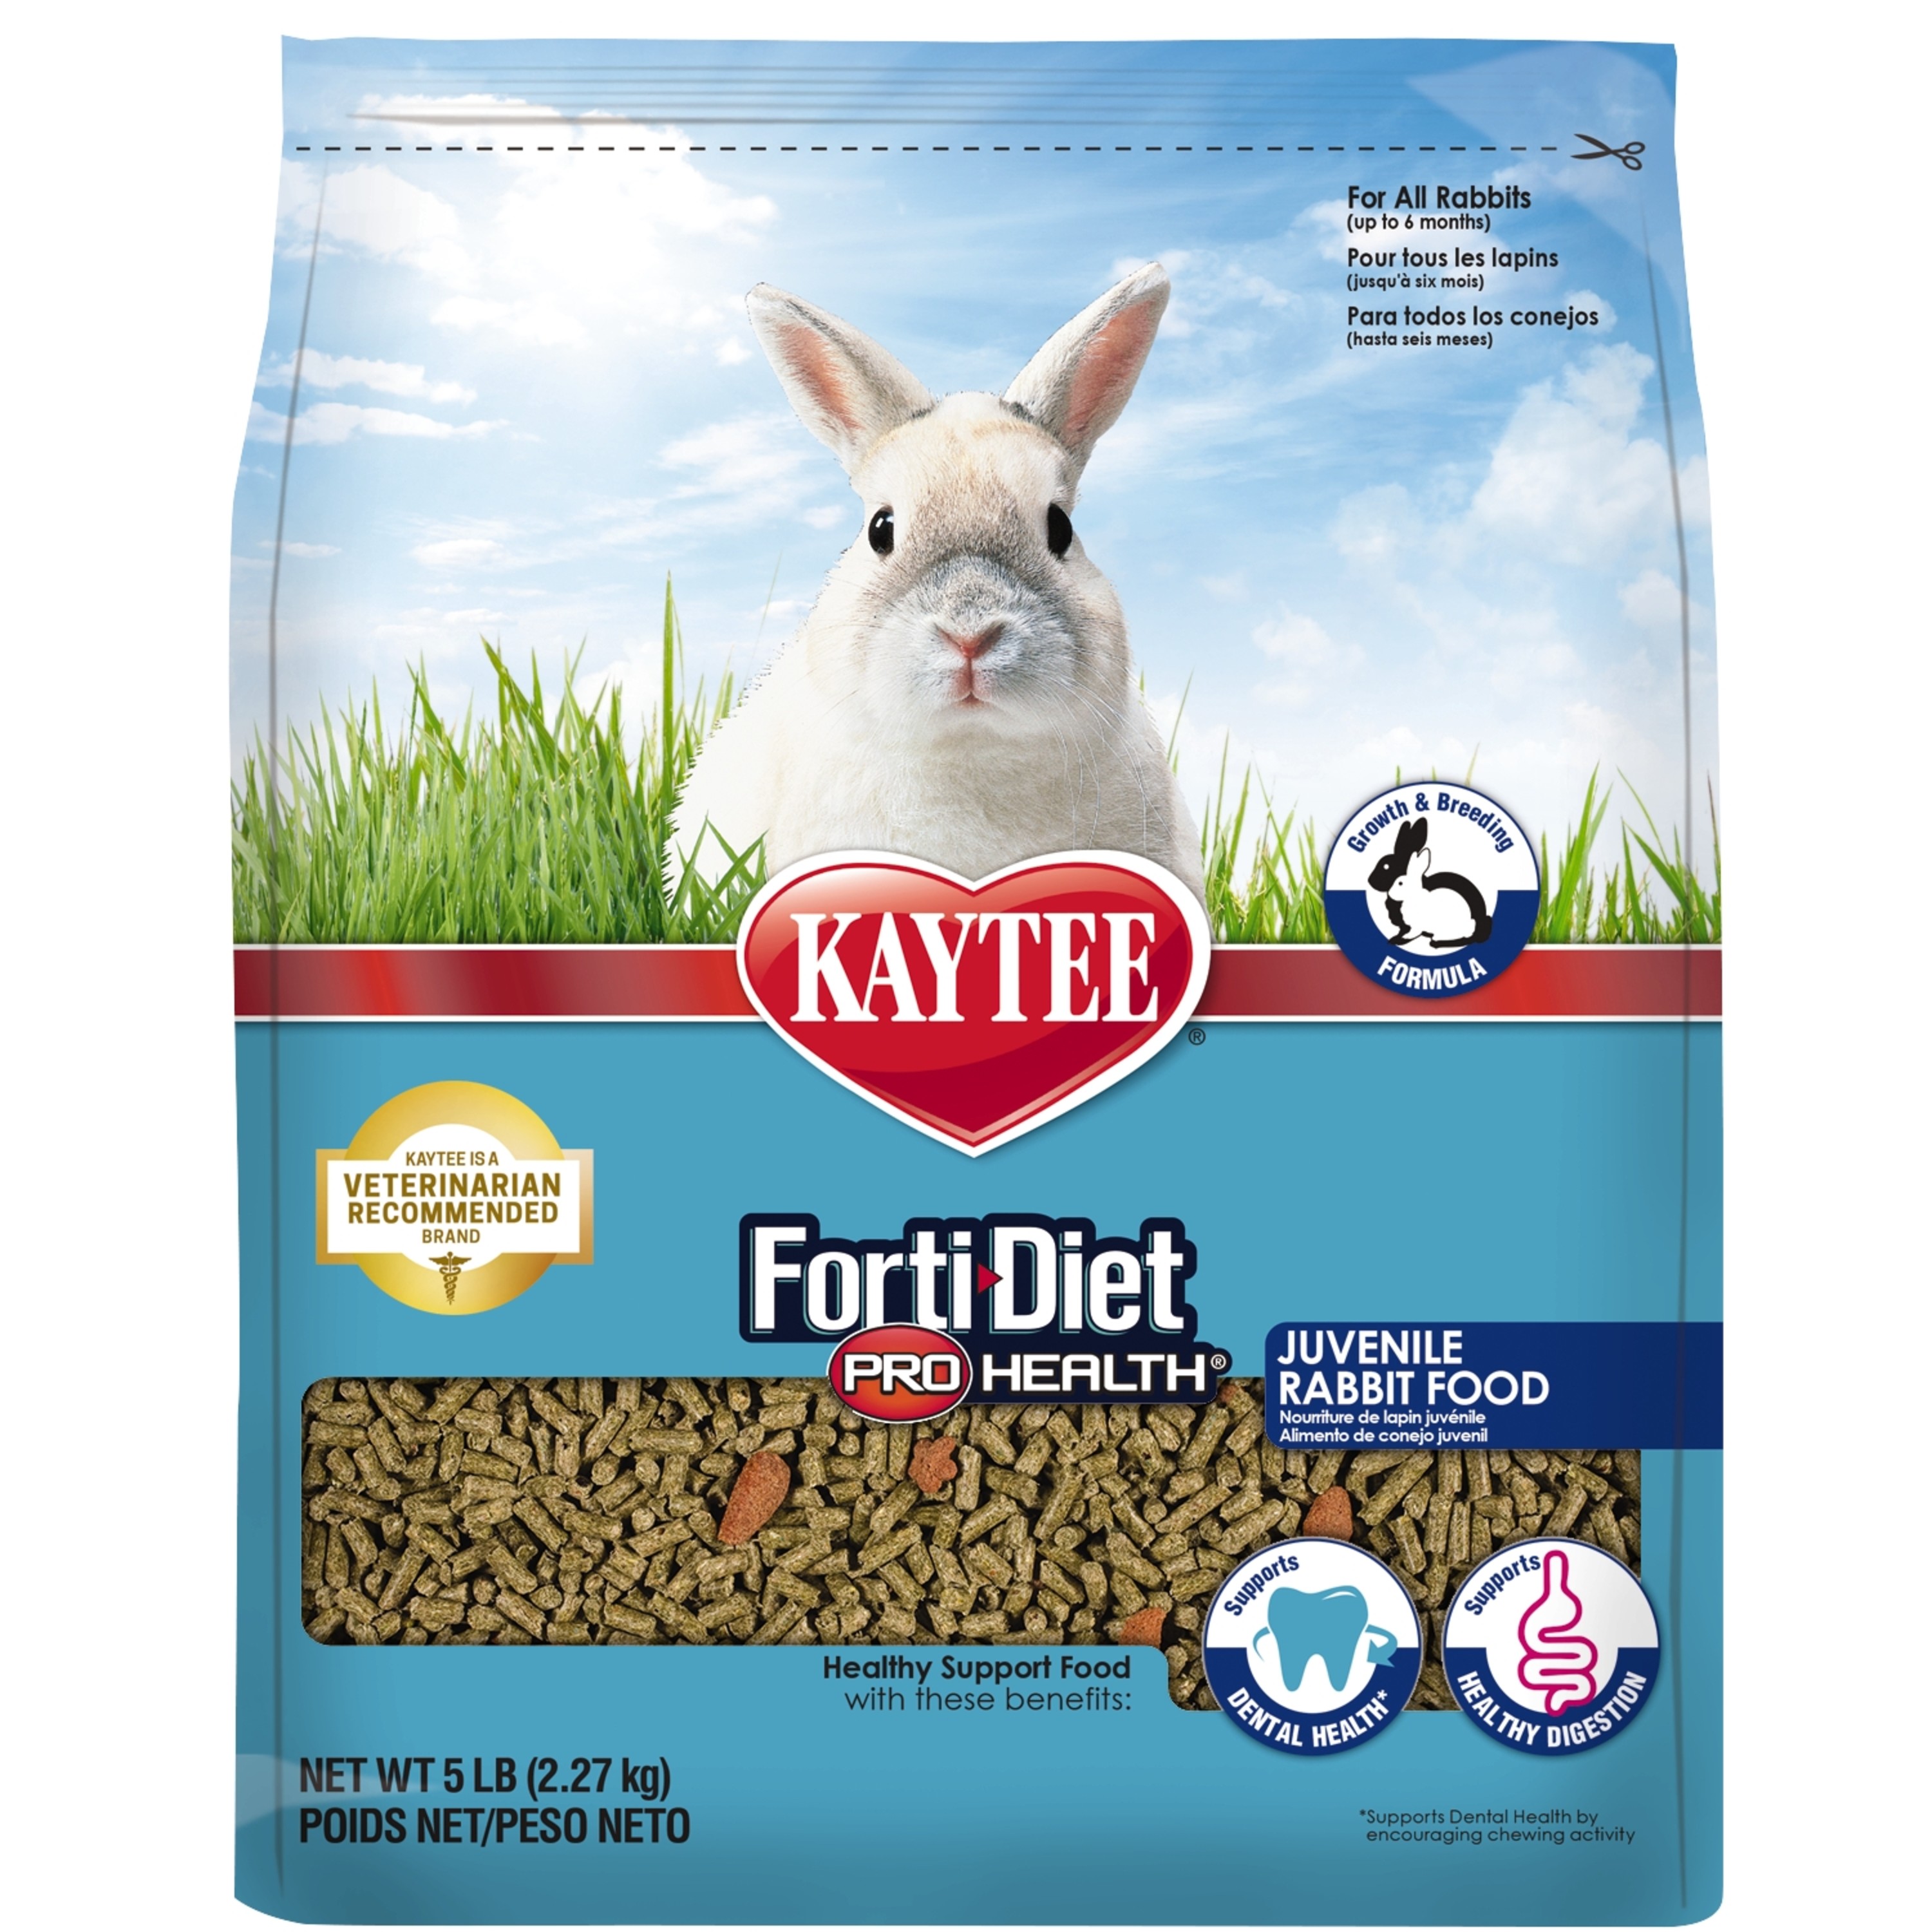 Kaytee Forti-Diet Pro Health Juvenile Rabbit Food 5lb - image 1 of 11